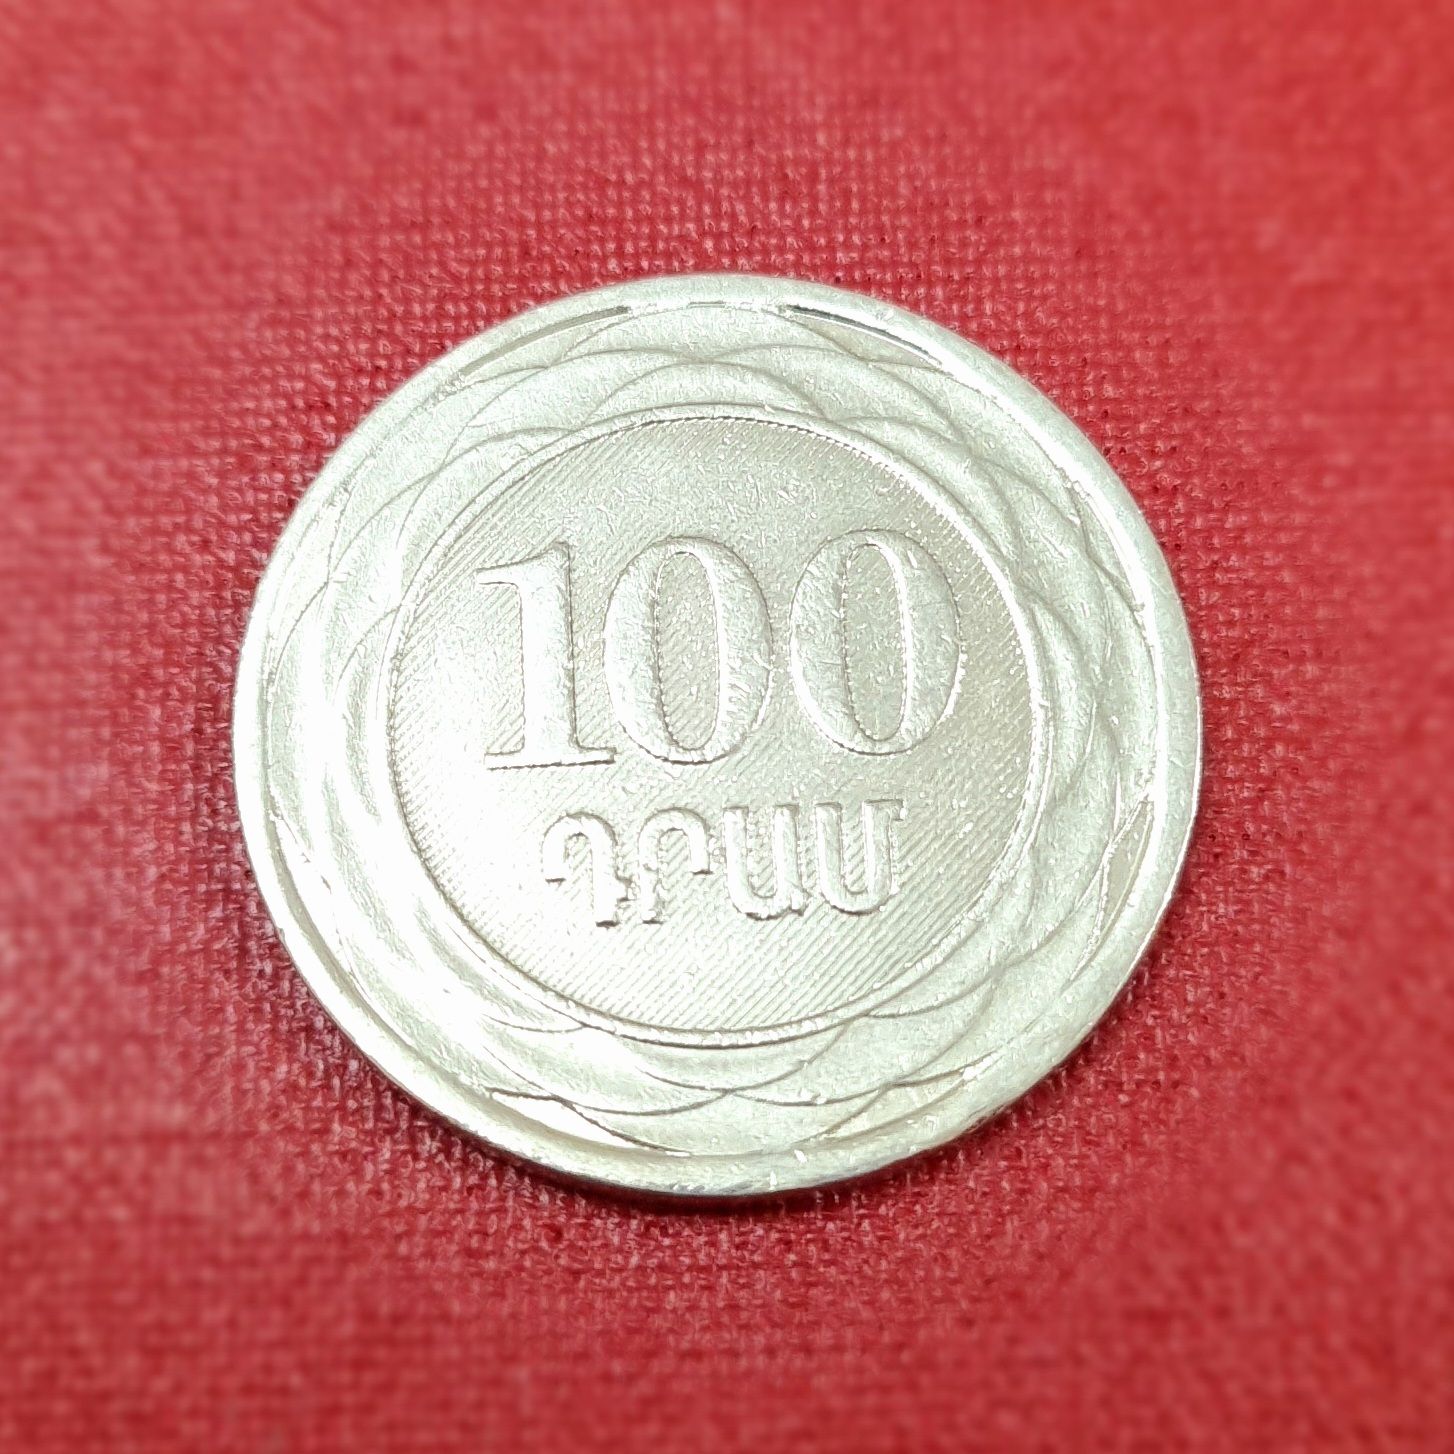 7000 драм в рублях. 100 Драм монета. 100 Драм 2003. Монеты Армении 2003. 100 Драм Армения.